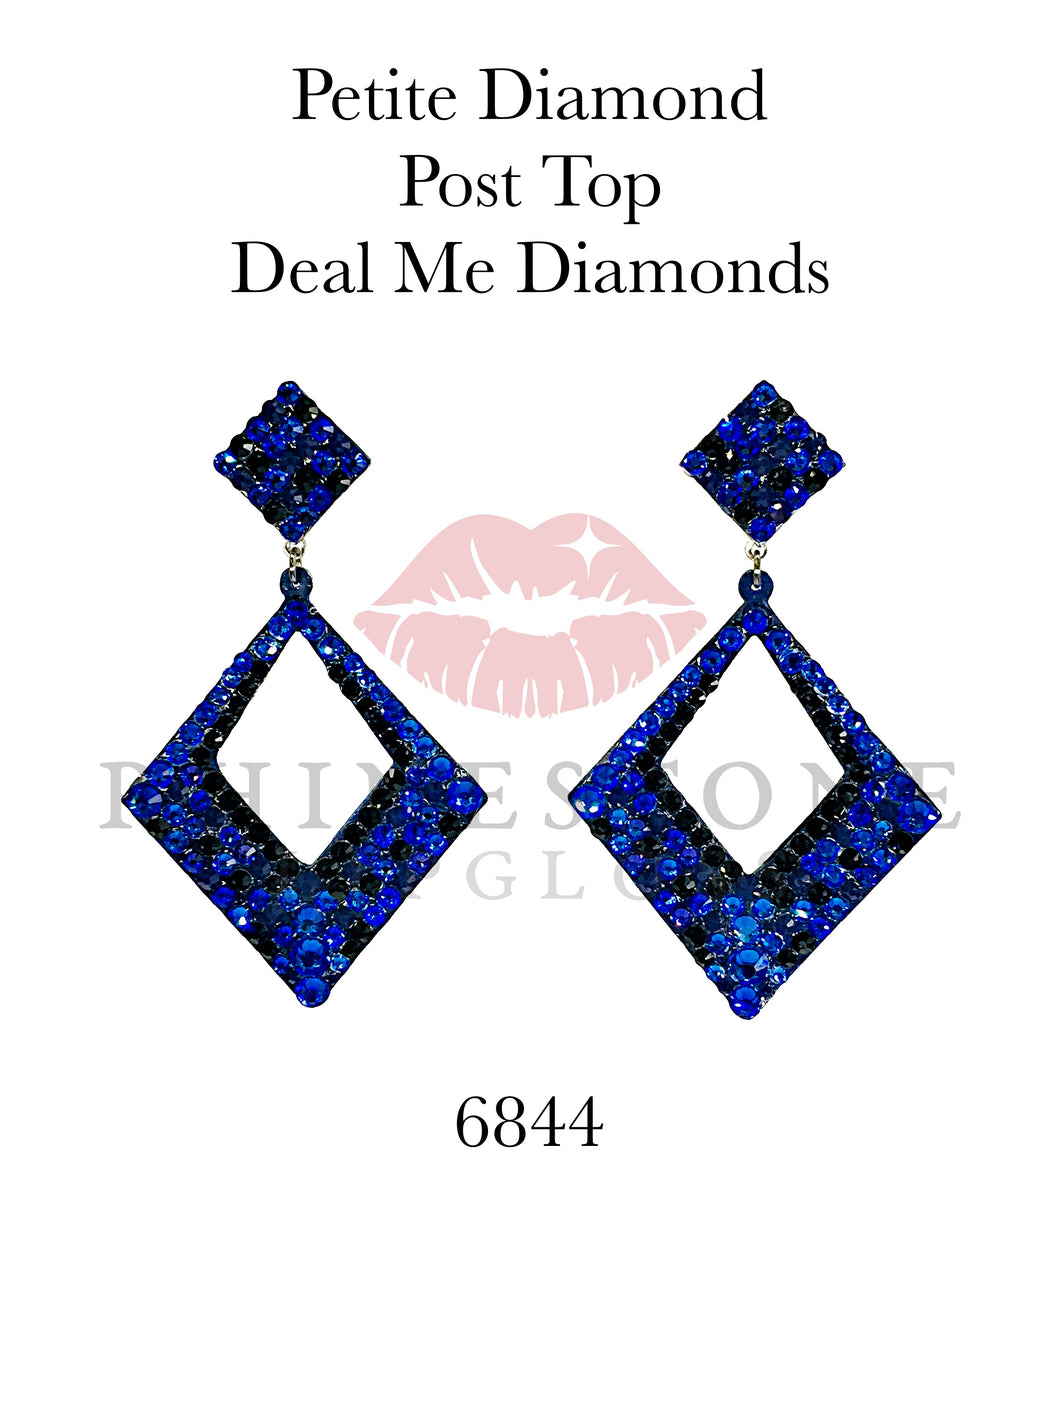 Deal Me Diamonds, Petite Diamond Top 6844